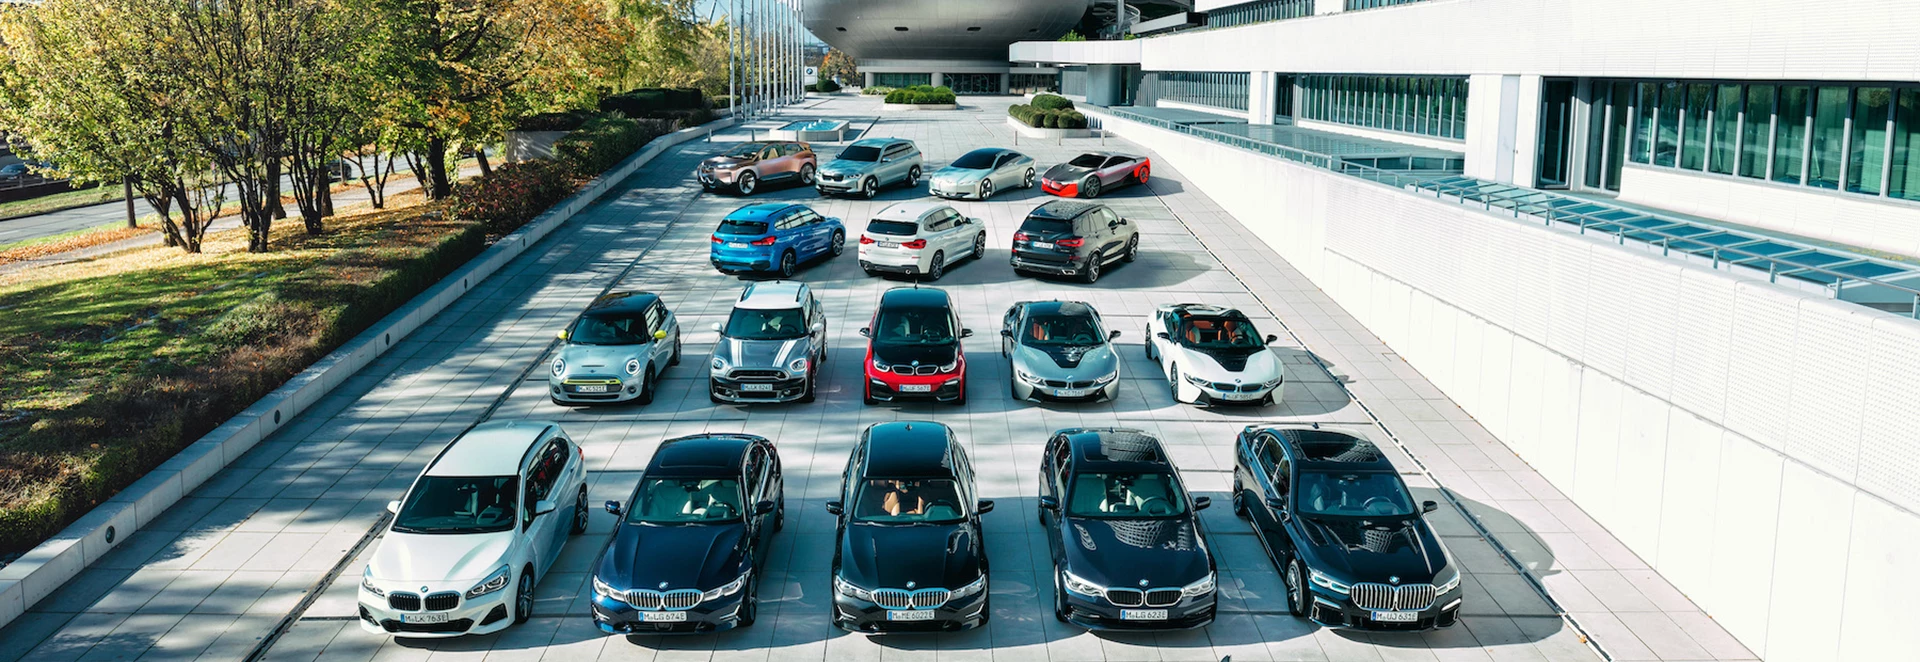 BMW clocks up 500,000 electrified vehicle sales